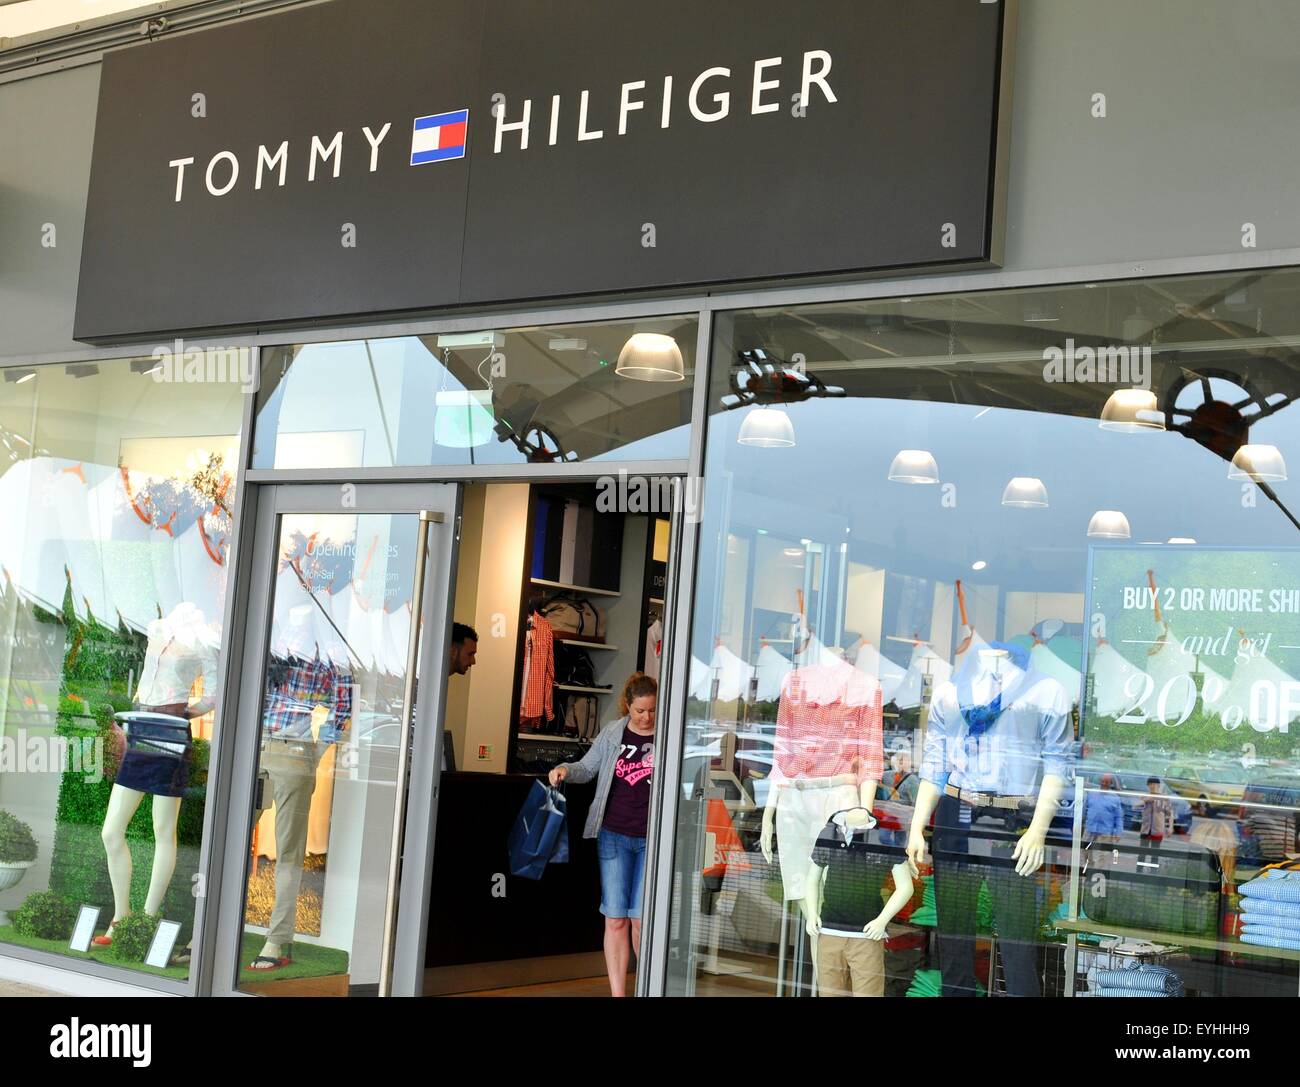 Tommy Hilfiger Clothing Stockfotos & Tommy Hilfiger Clothing Bilder - Alamy